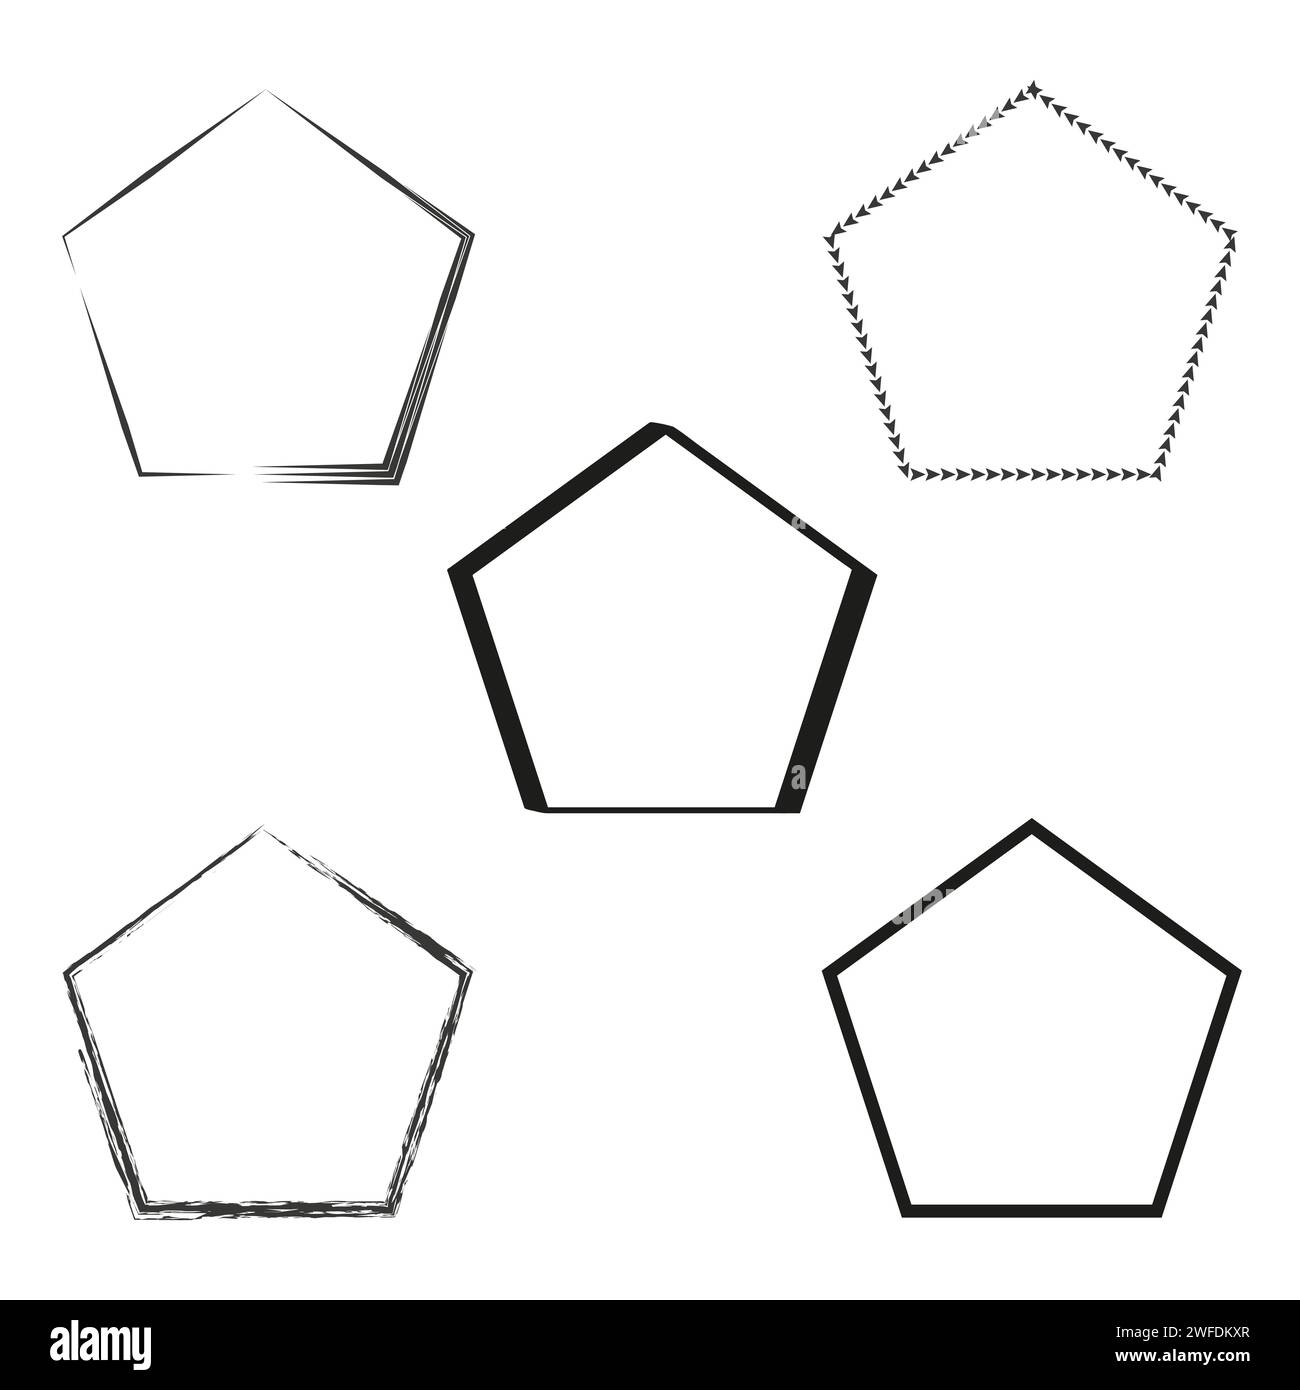 polygon octagon line. Vector illustration. EPS 10. Stock image. Stock Vector